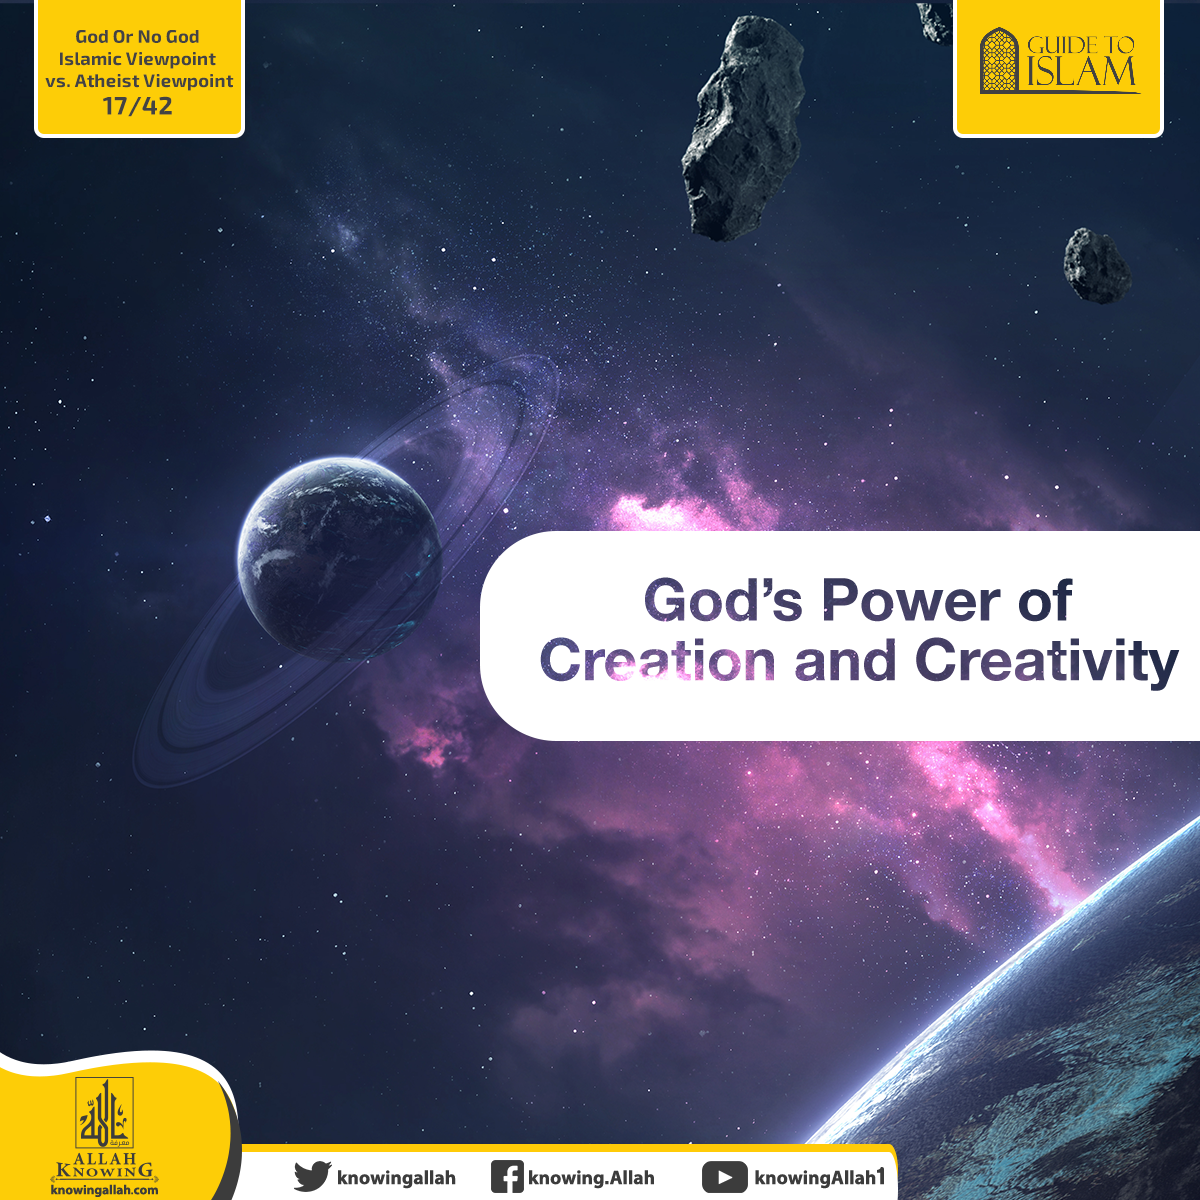 God’s Power of Creation and Creativity